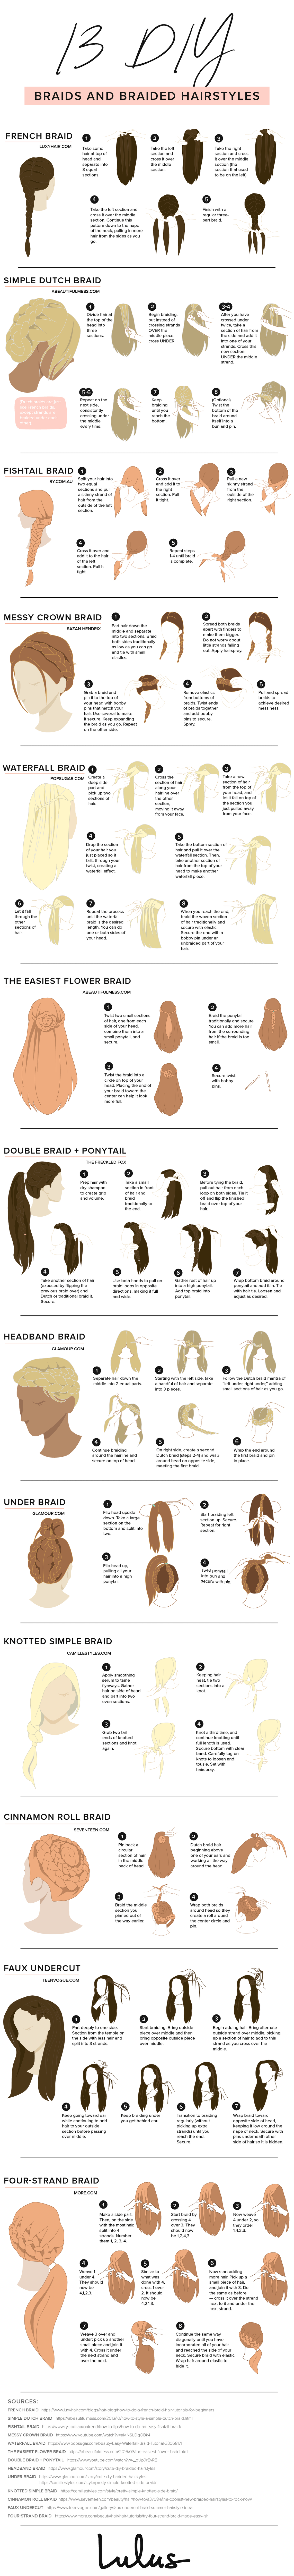 13 DIY Braids and Braided Hairstyles